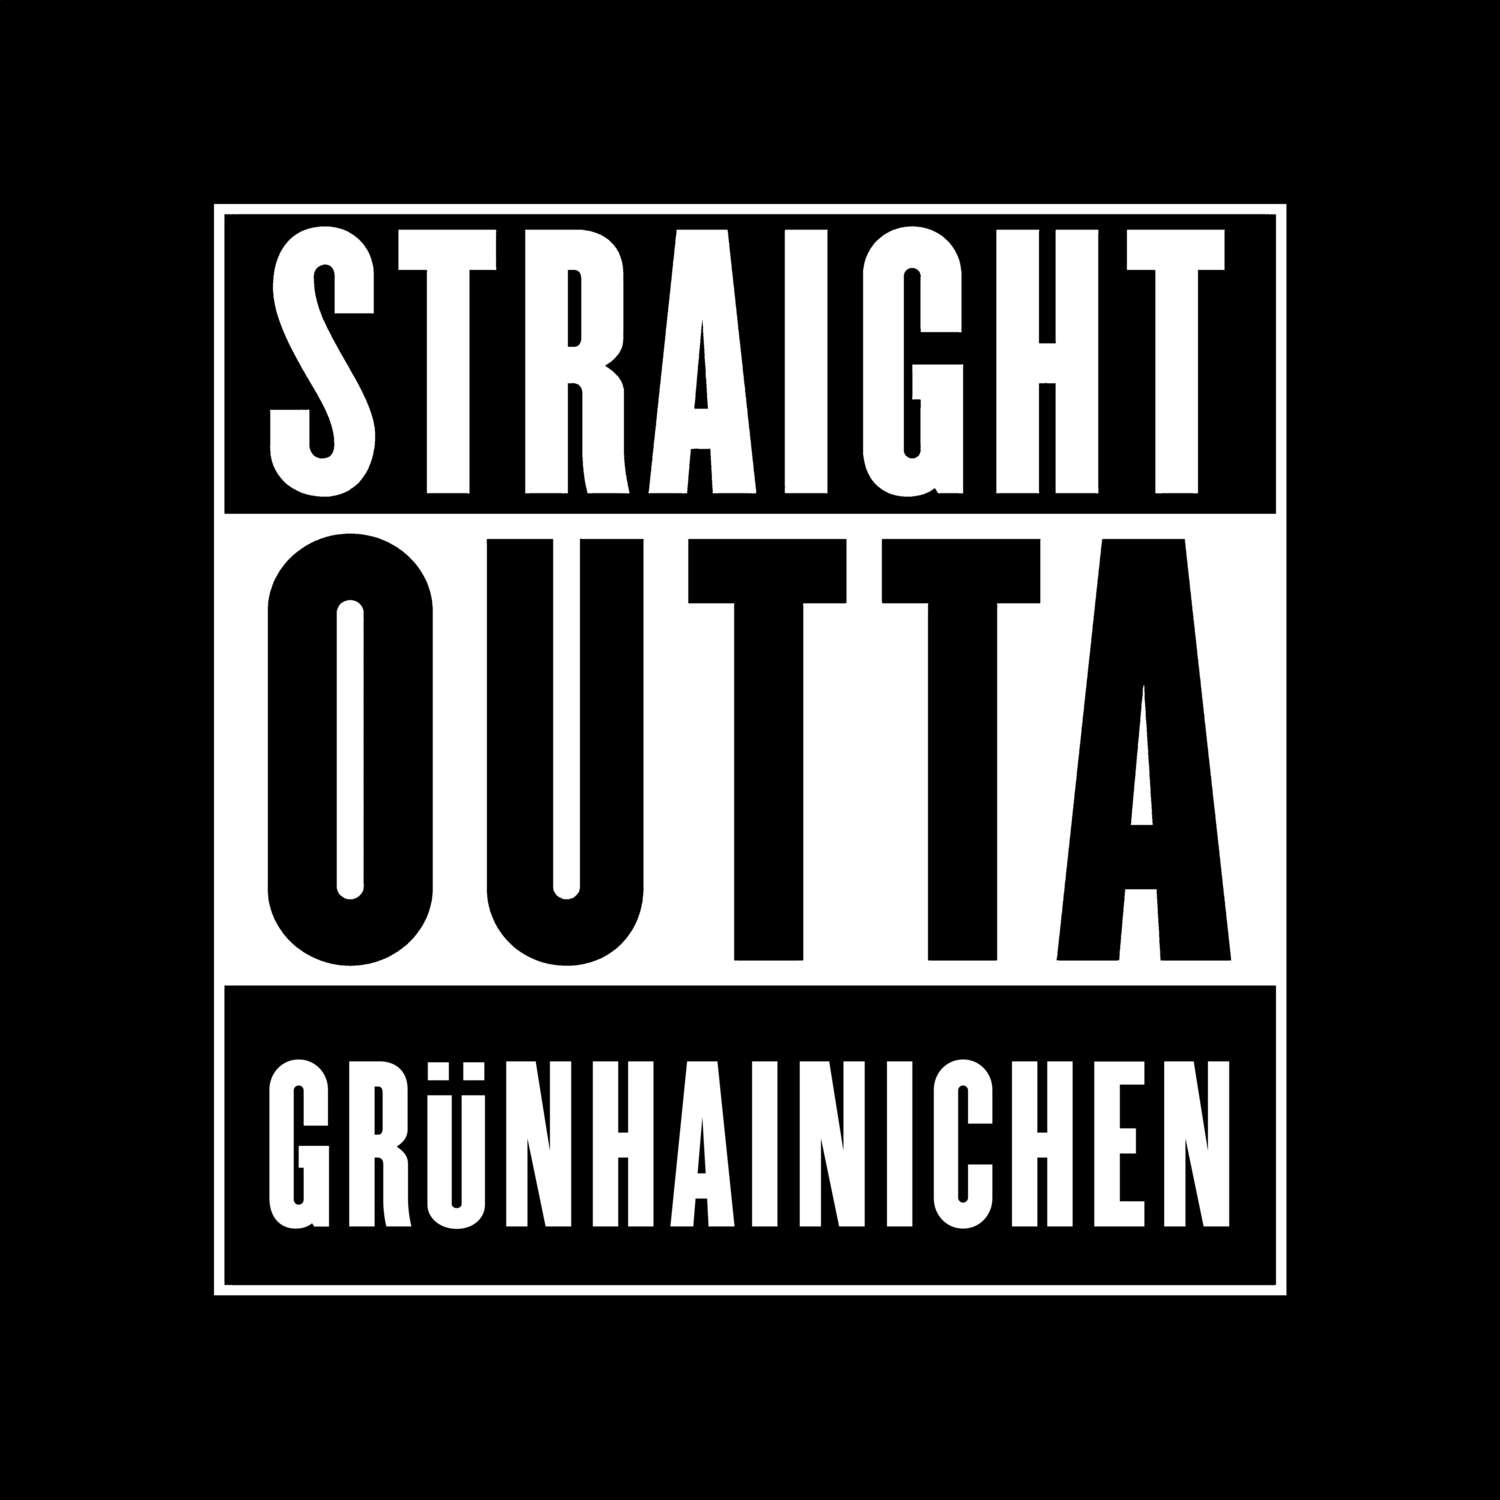 Grünhainichen T-Shirt »Straight Outta«